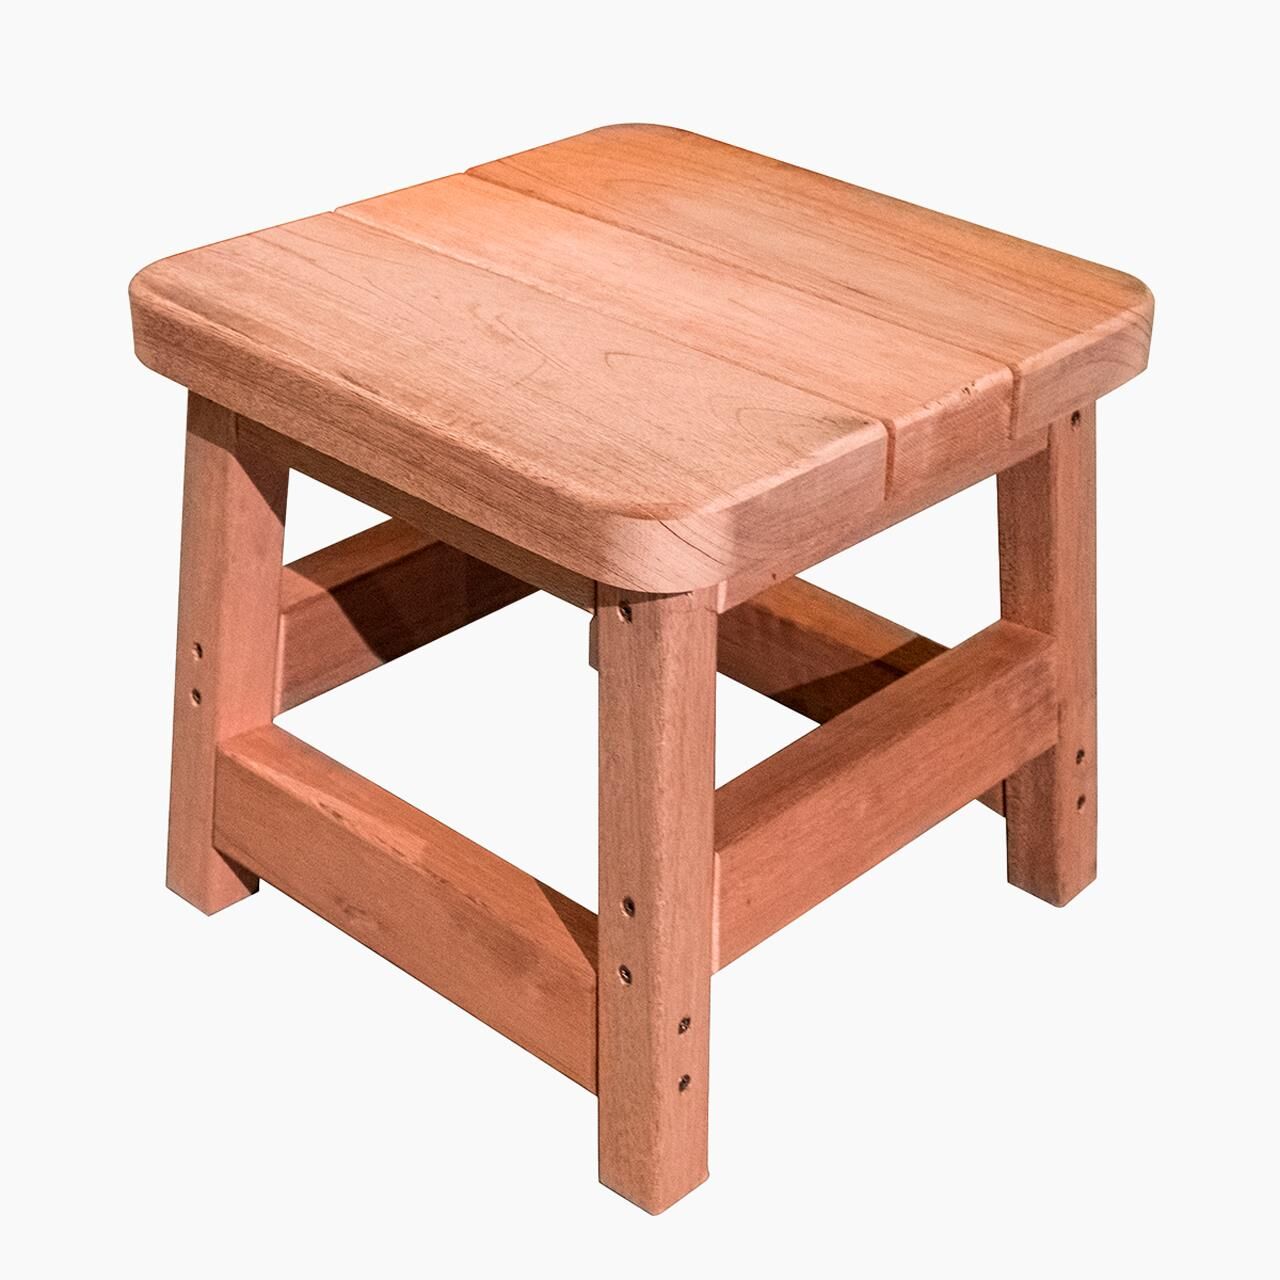 Outdoor-Hocker Stool - Redwood-Holz - Sitzhöhe 40 cm